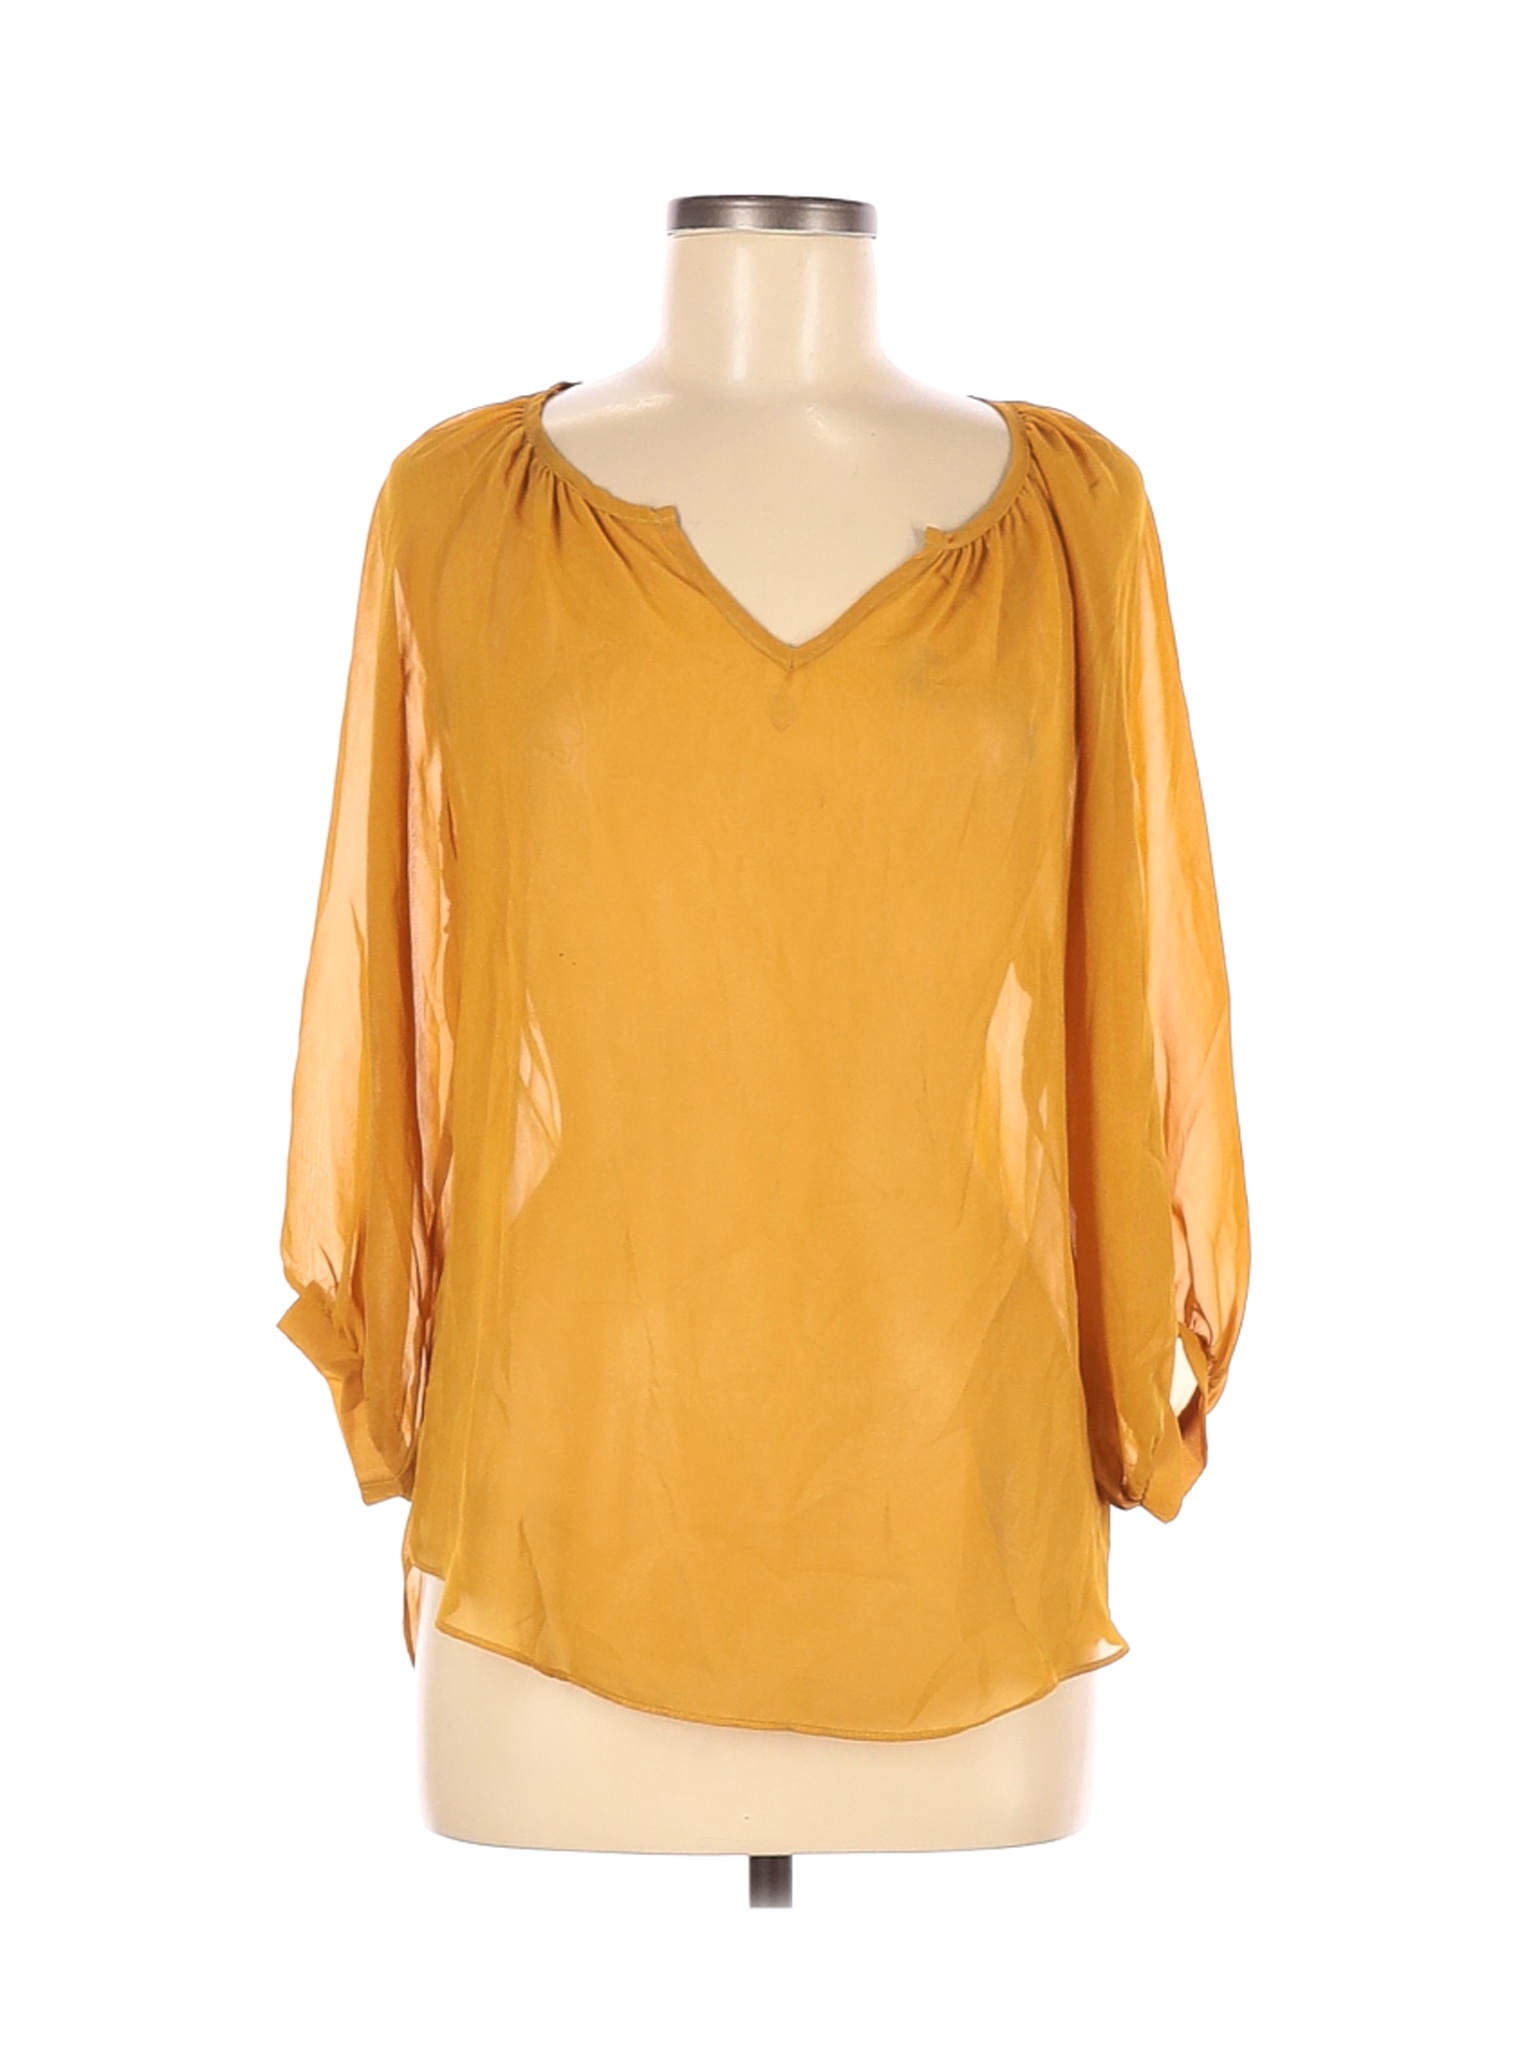 Unbranded Women Yellow 3/4 Sleeve Blouse M | eBay